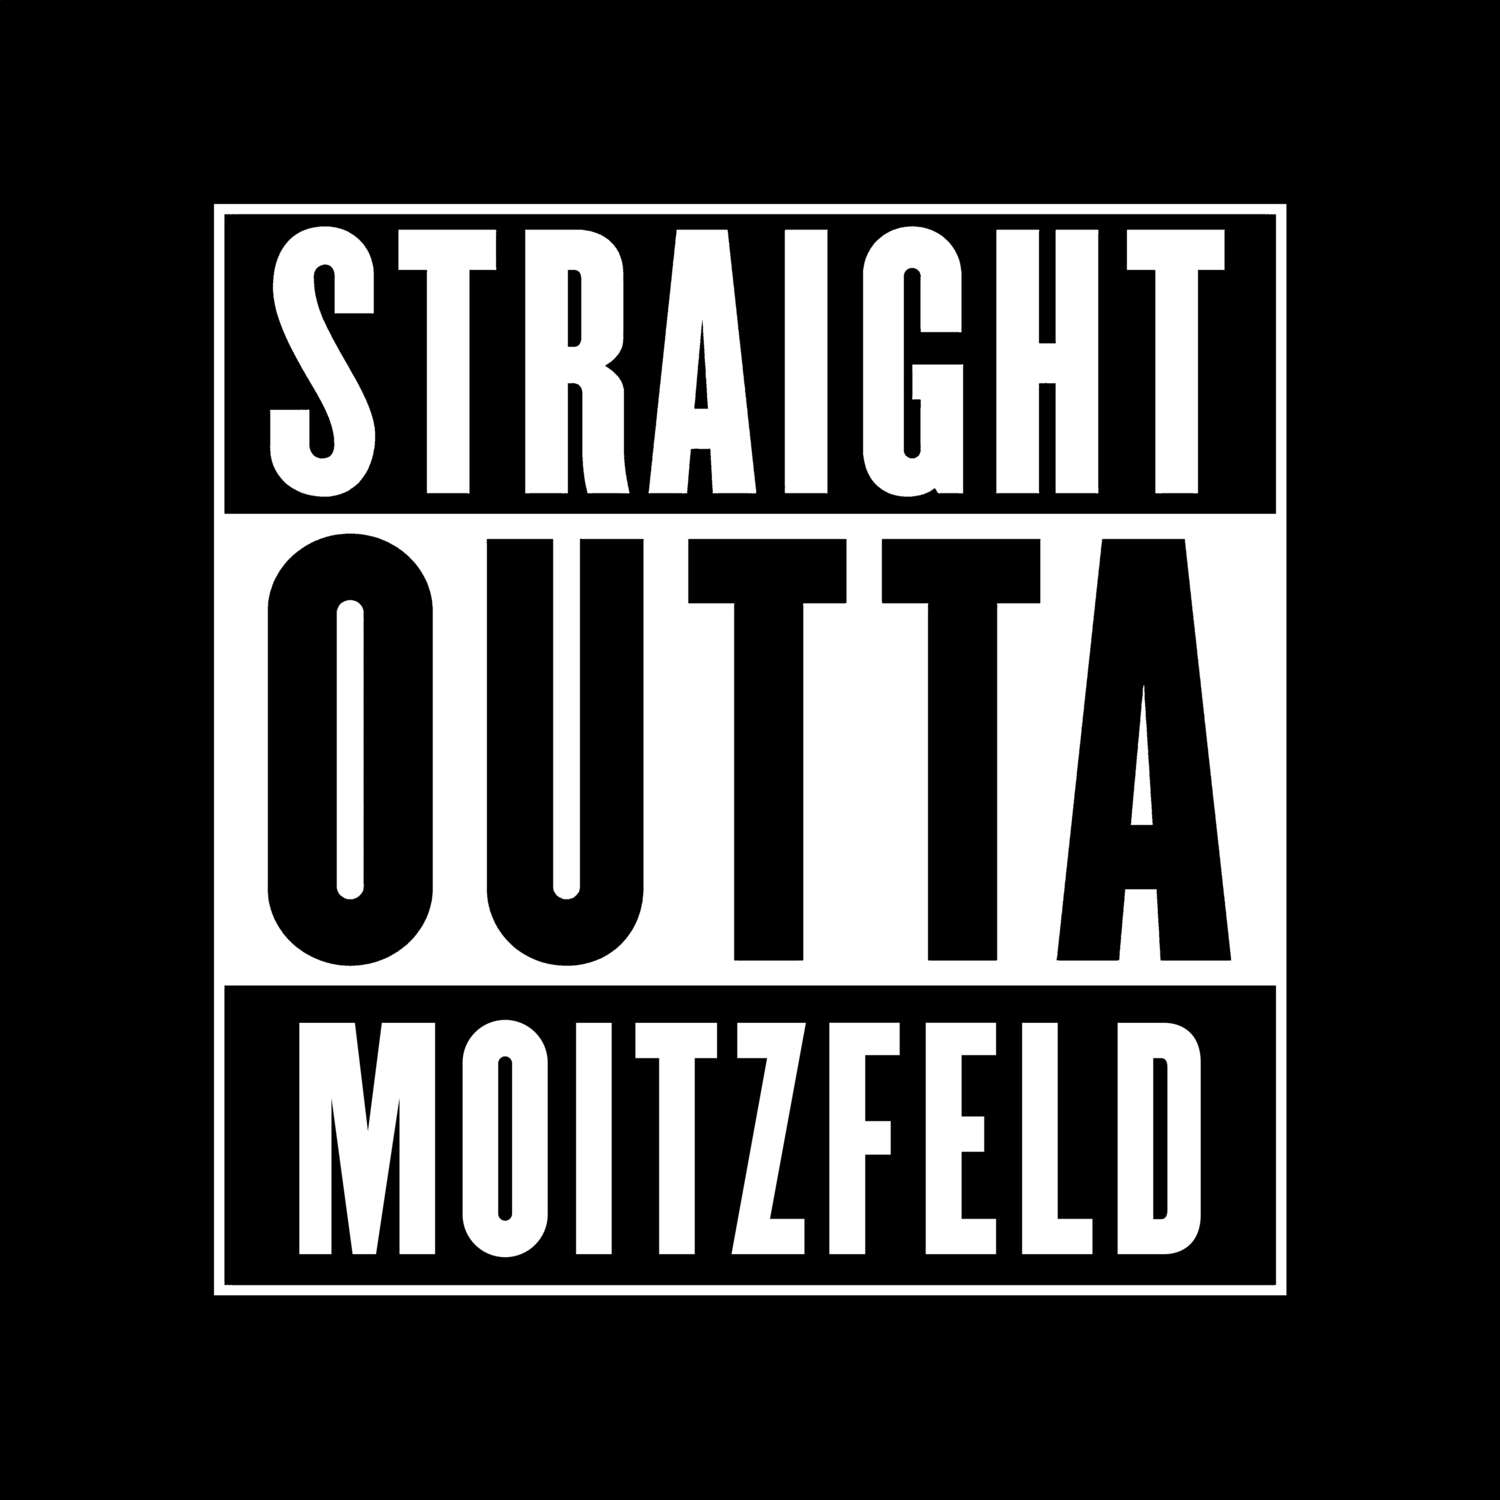 Moitzfeld T-Shirt »Straight Outta«